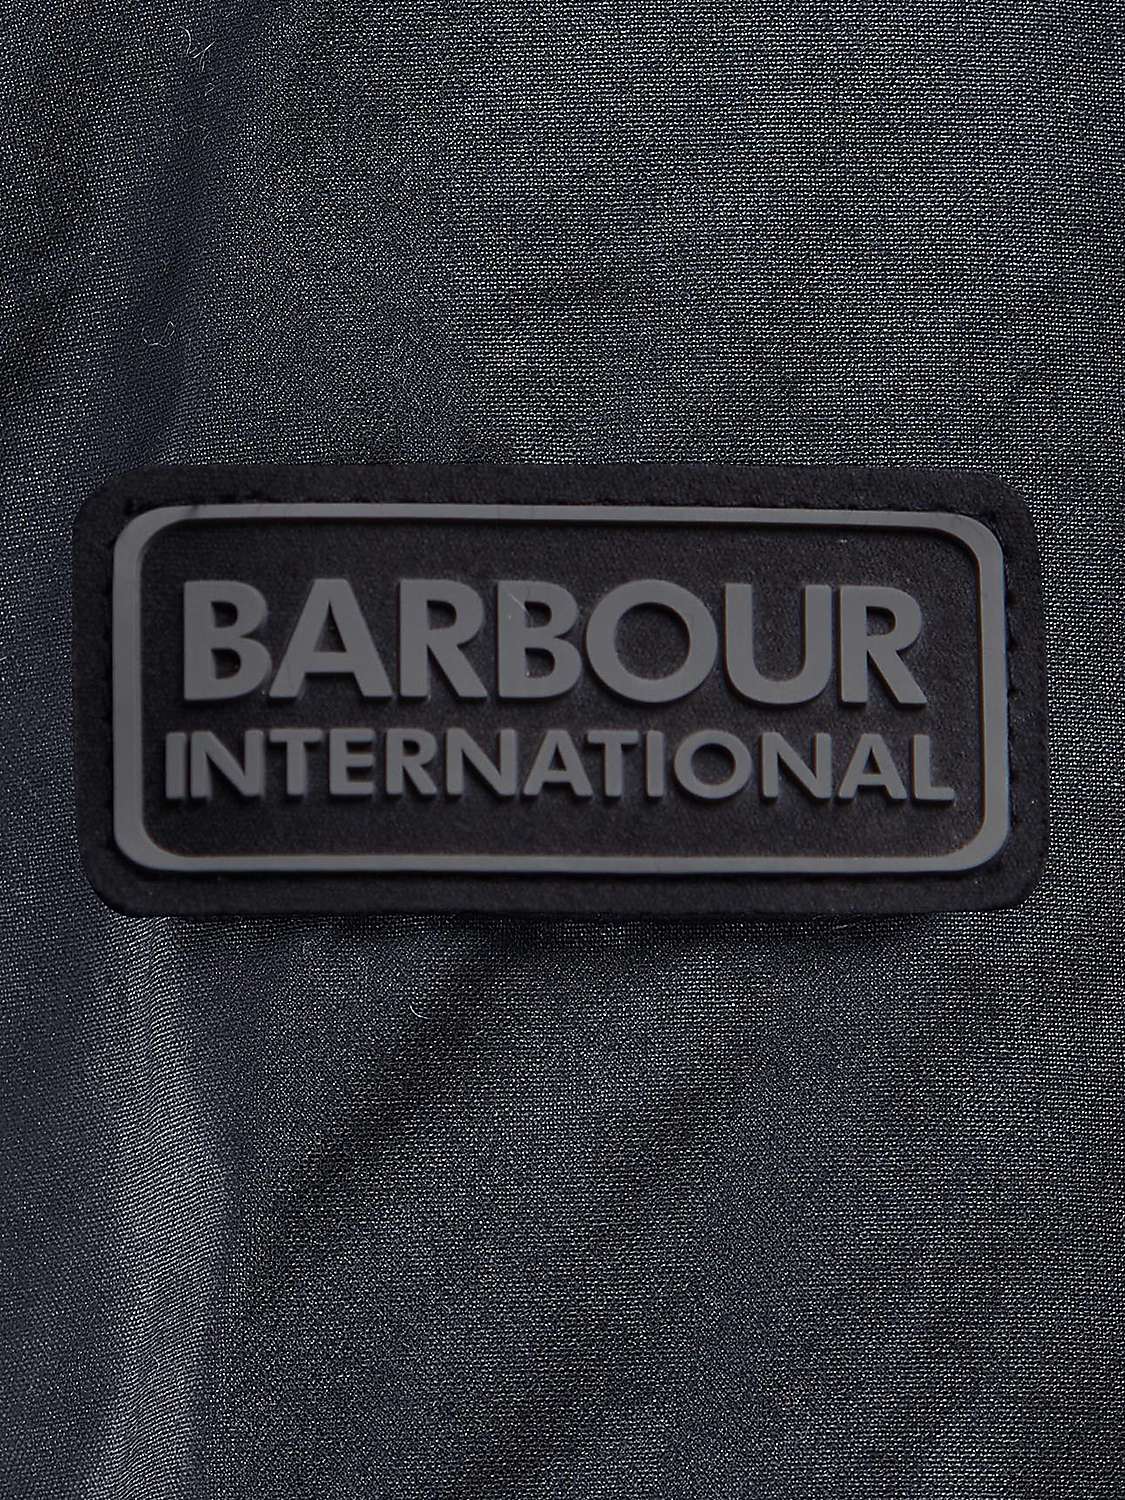 Buy Barbour International Tourer Duke Waxed Jacket Online at johnlewis.com